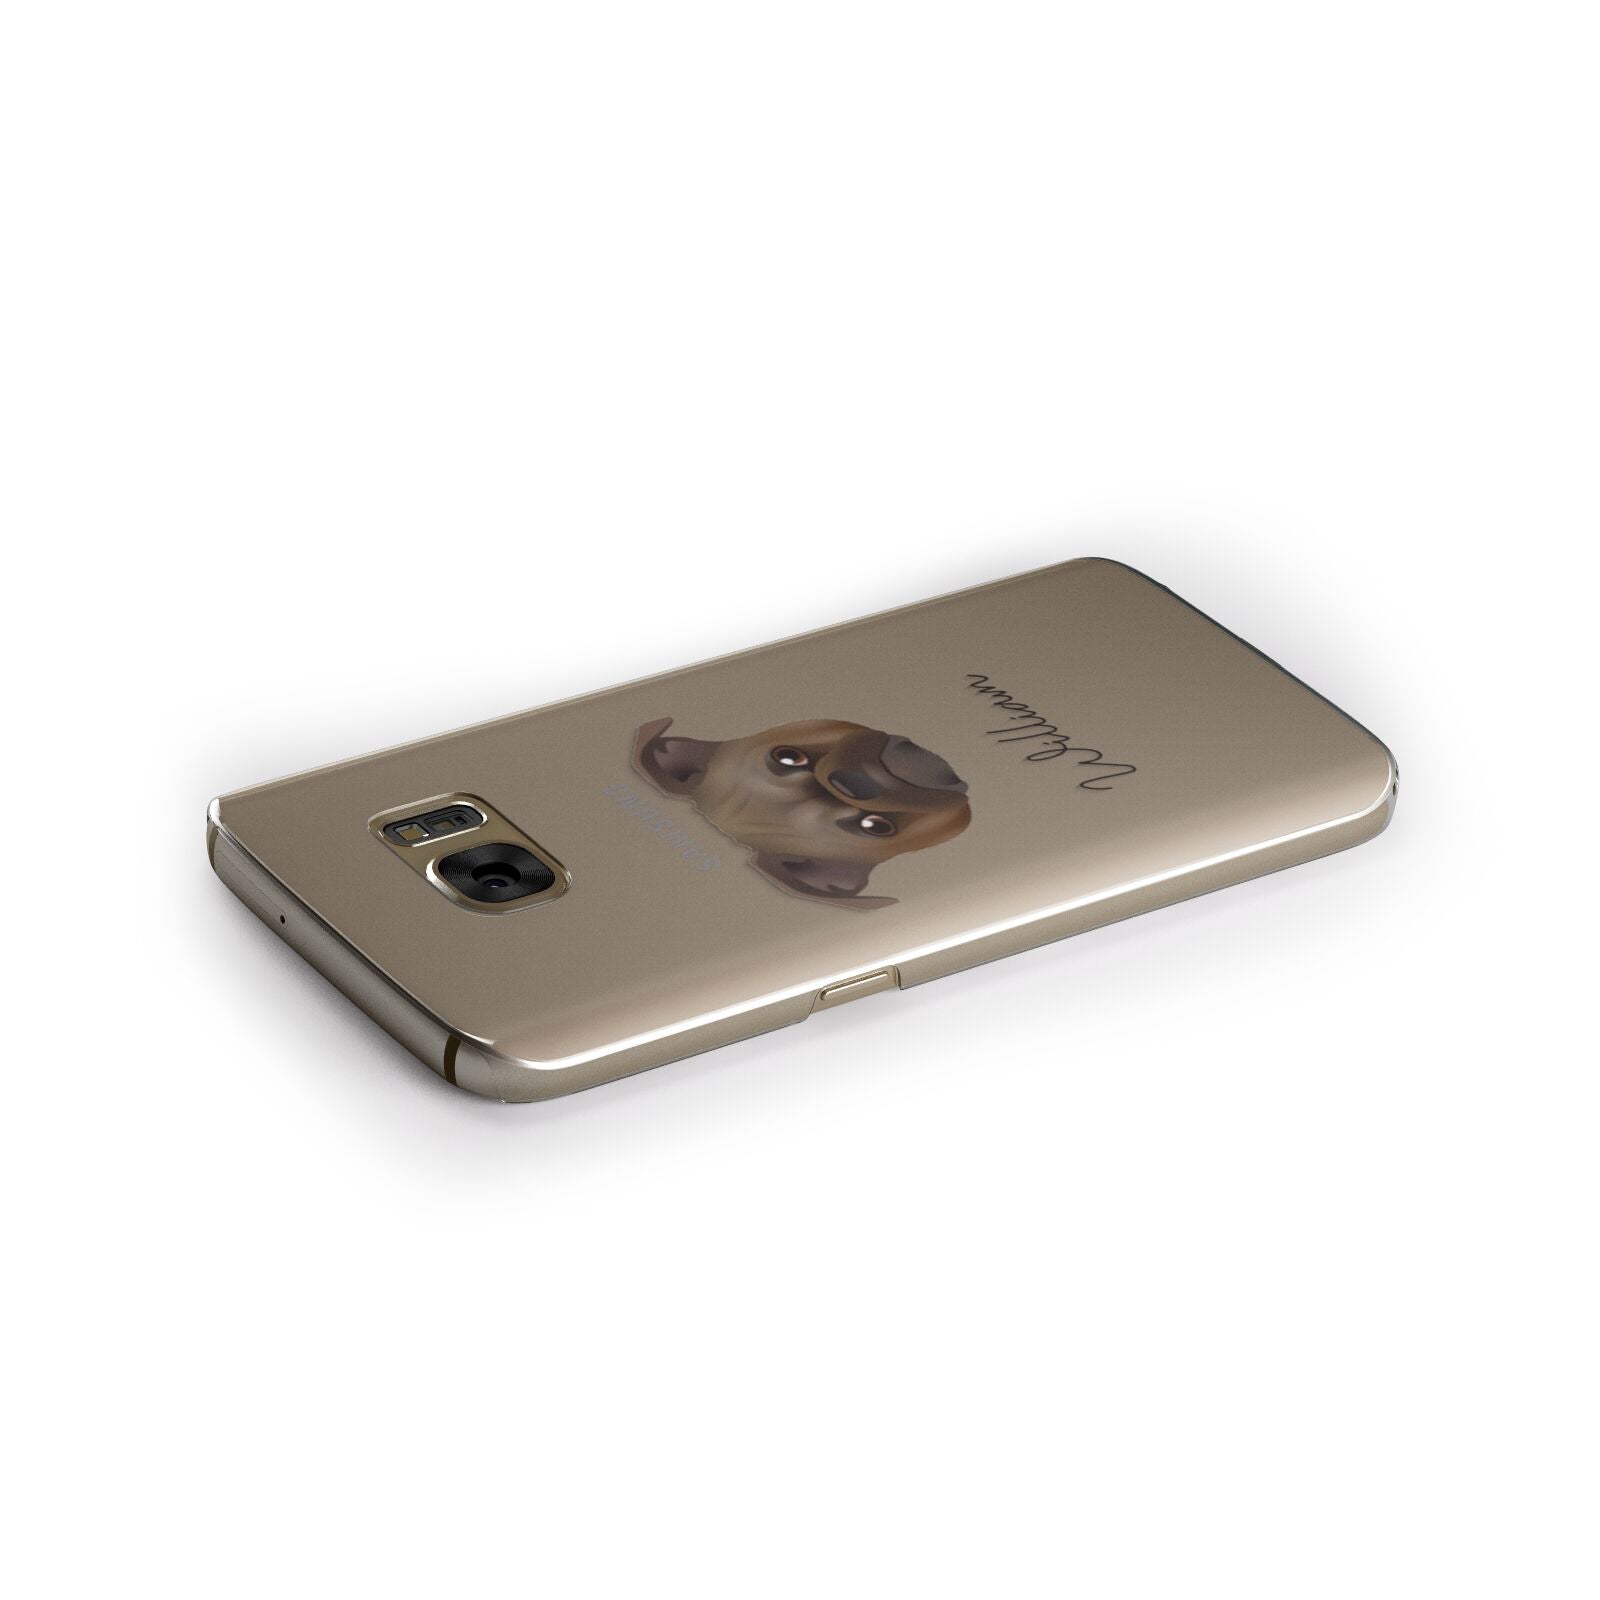 Chug Personalised Samsung Galaxy Case Side Close Up